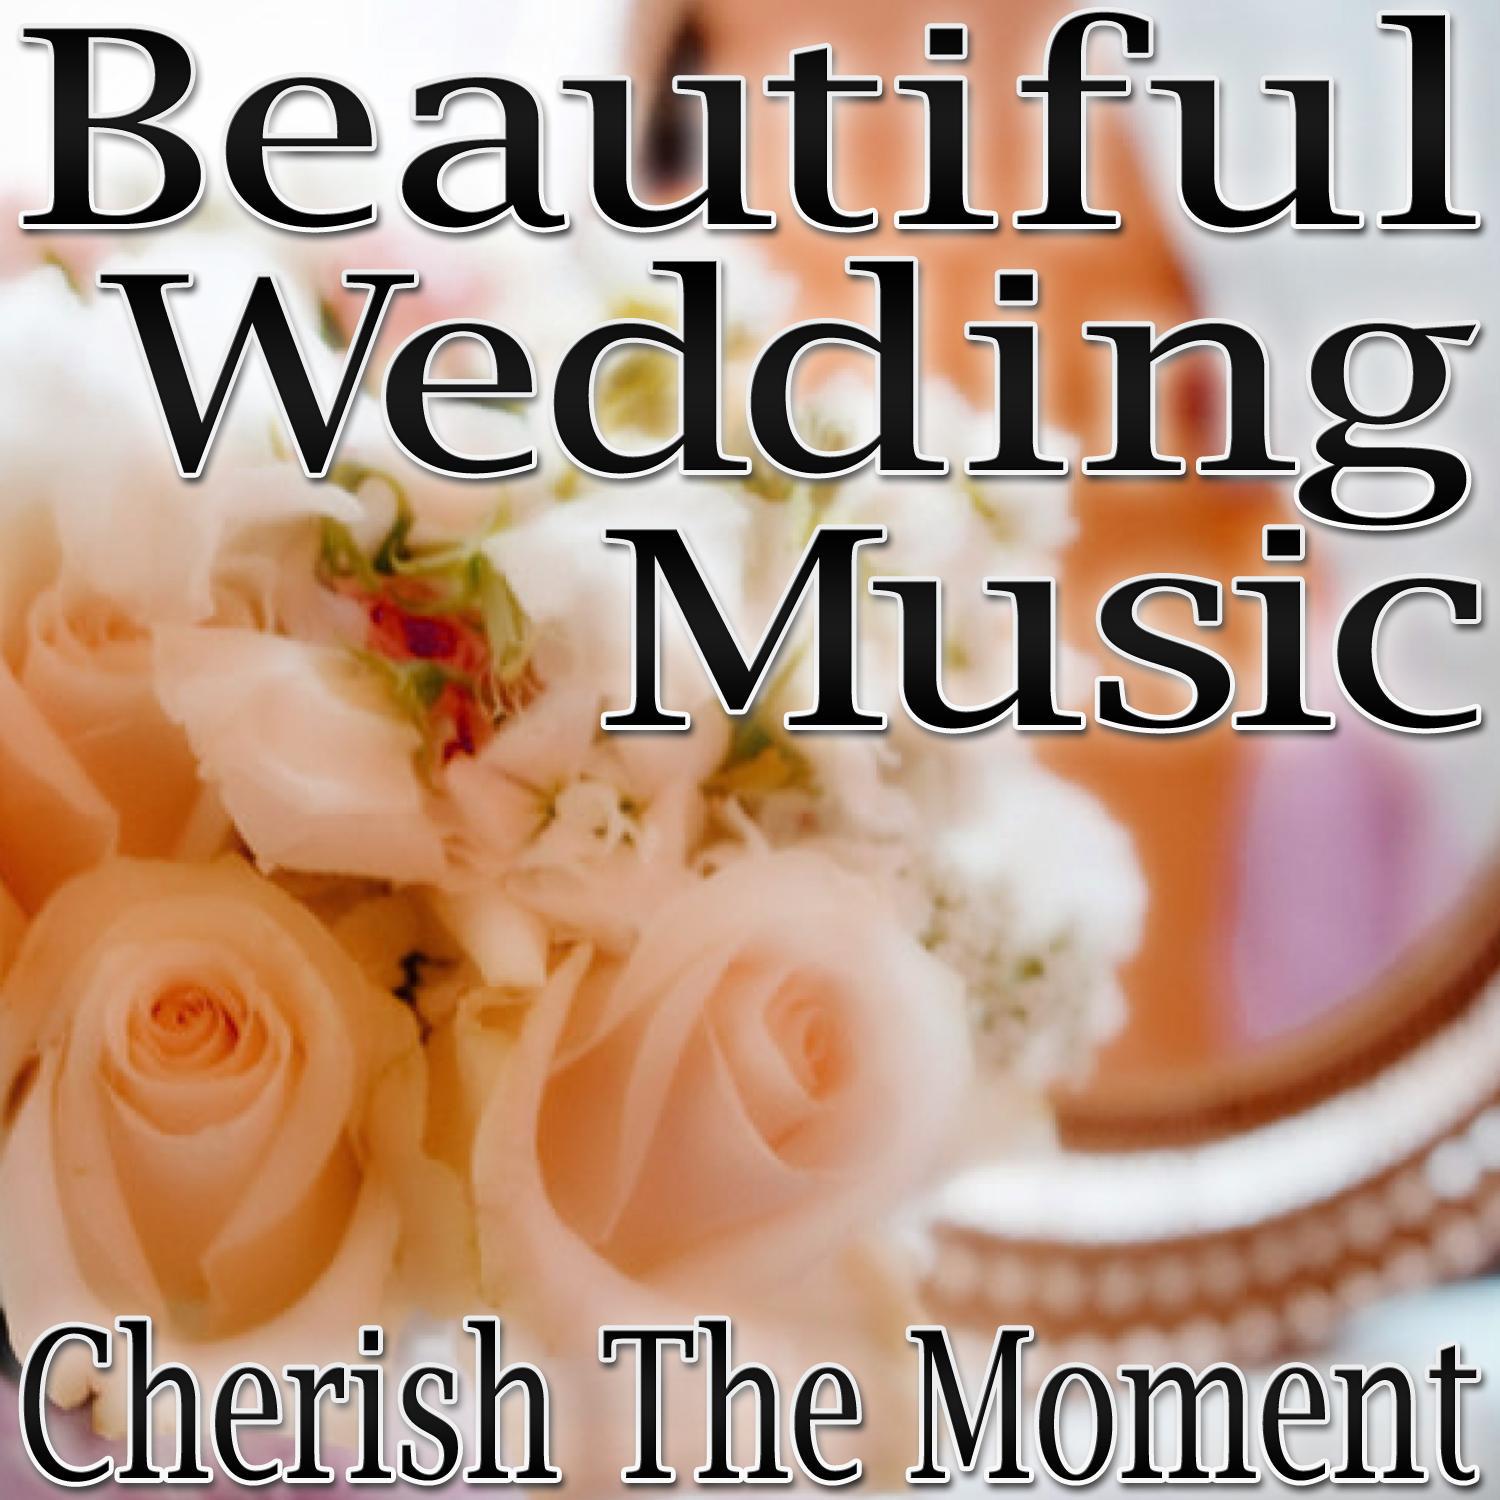 Beautiful Wedding Music (Cherish The Moment)